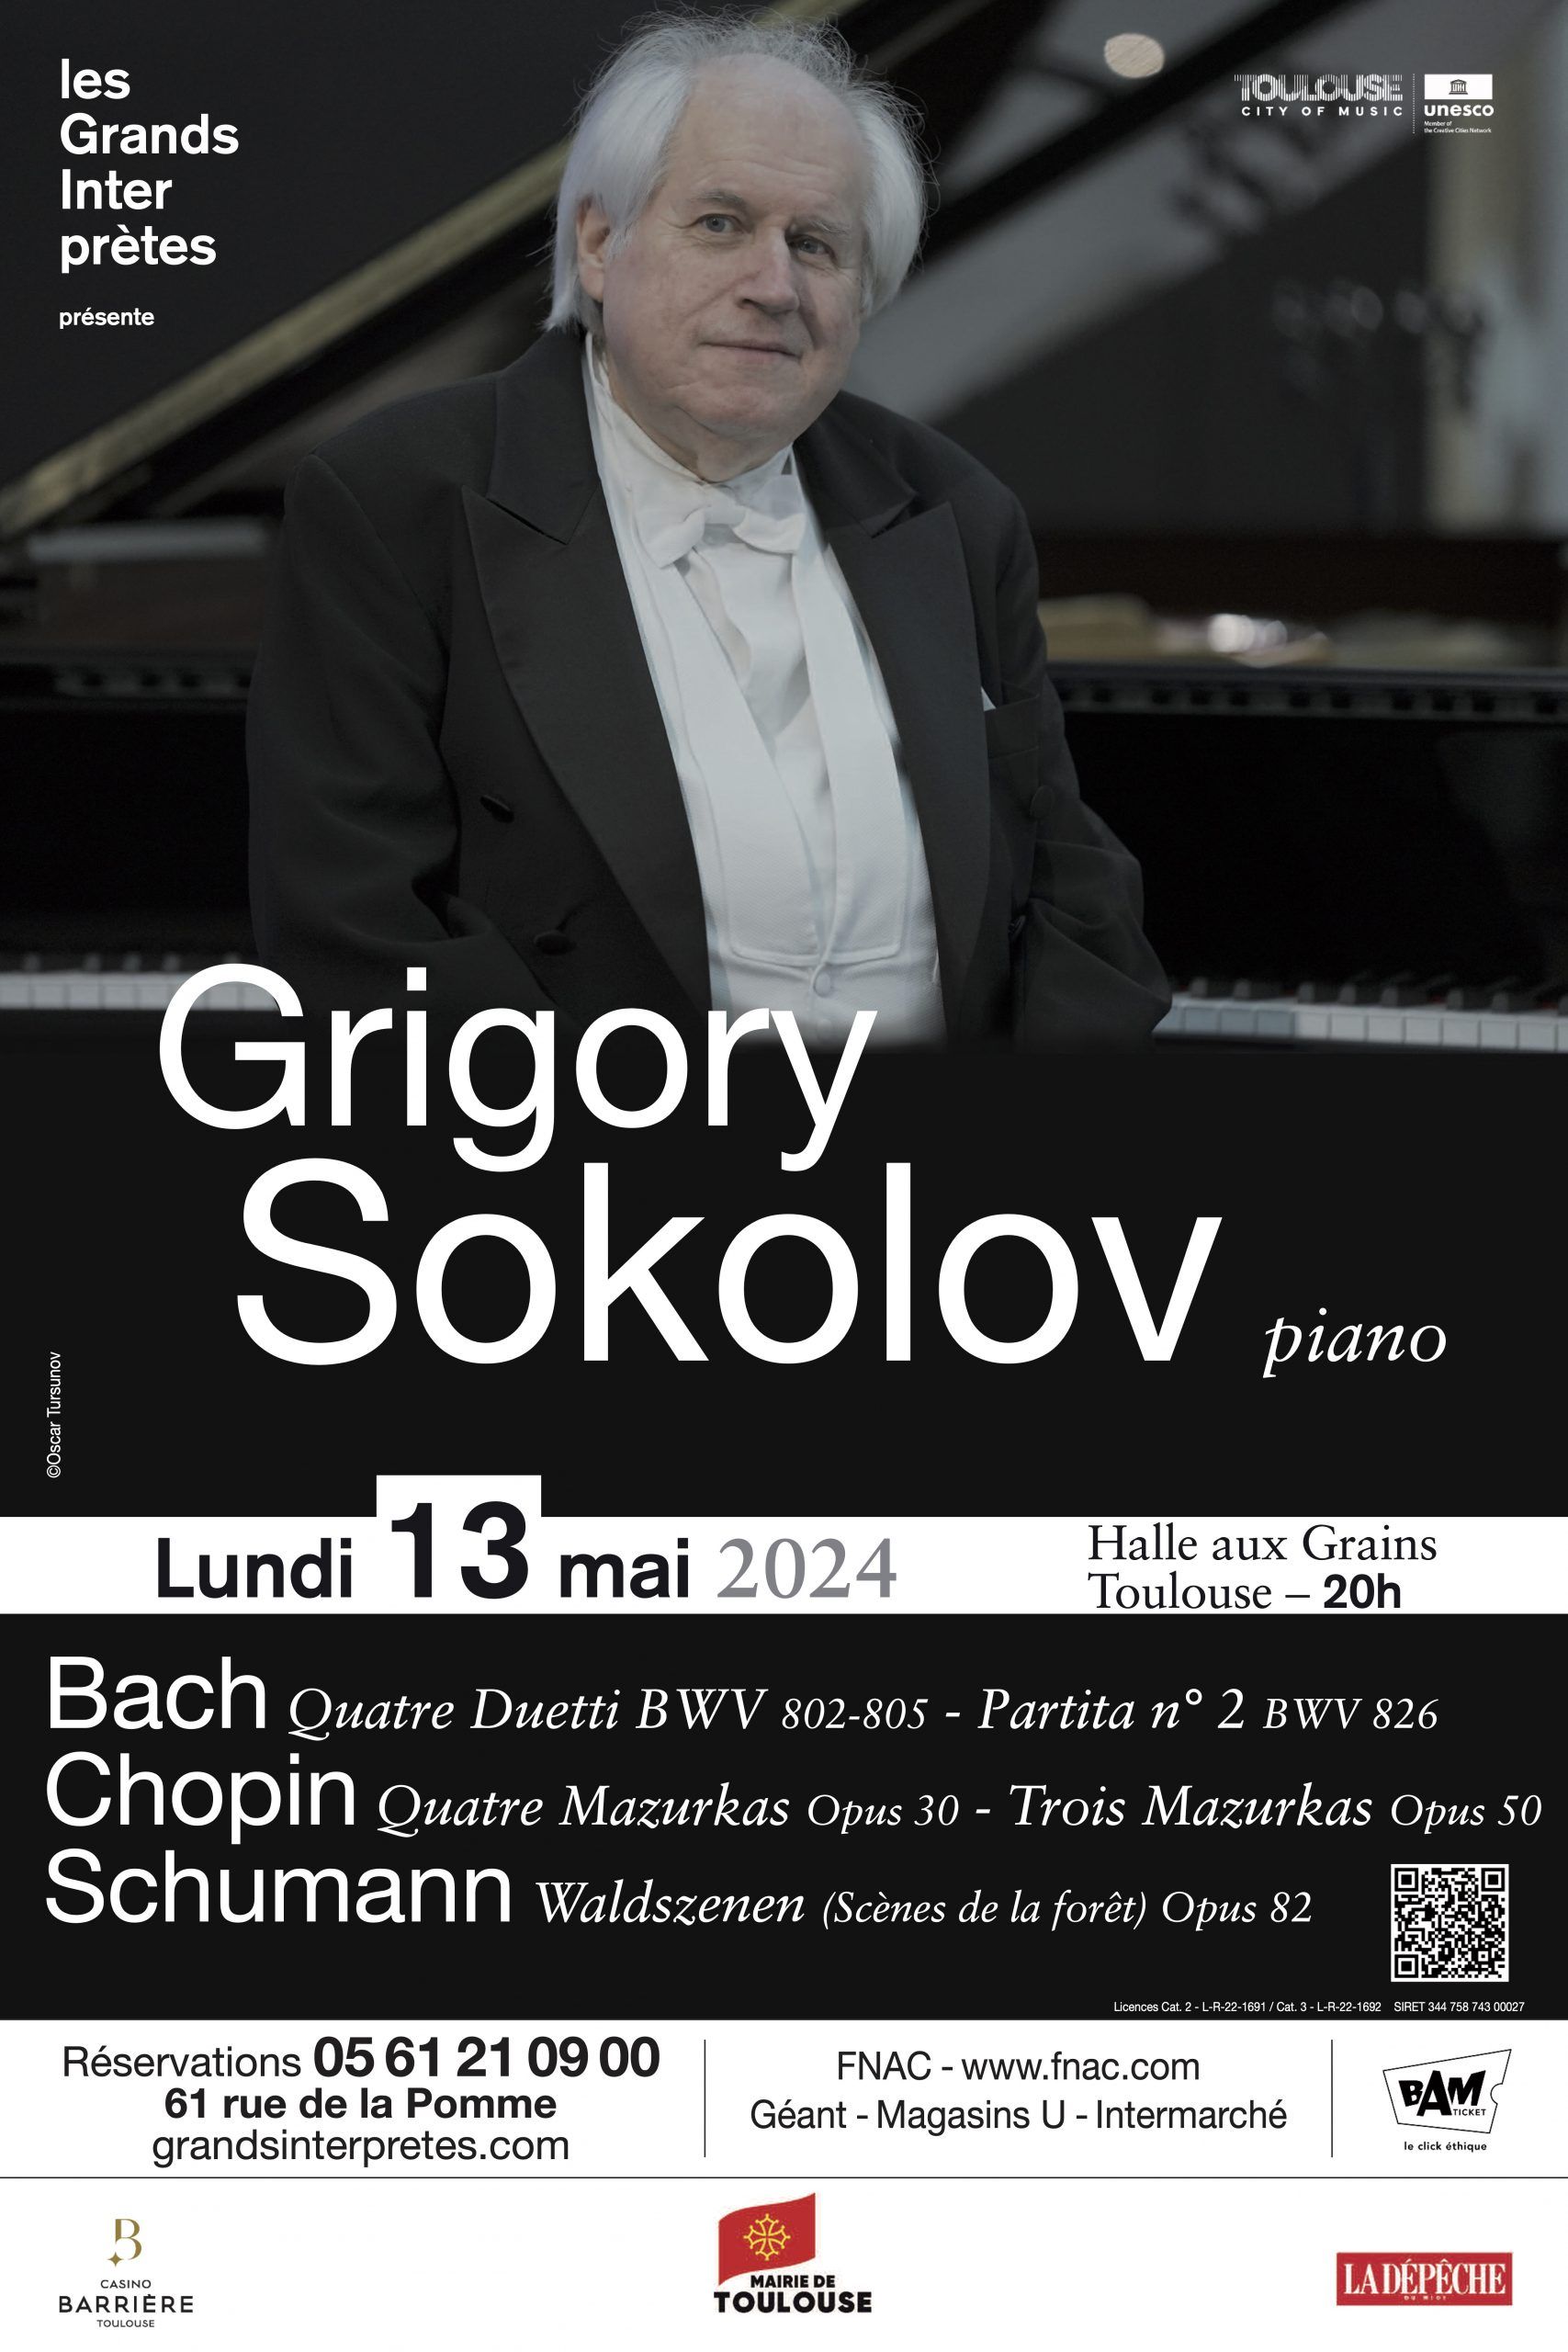 Les Grands Interprètes - Grigory Sokolov